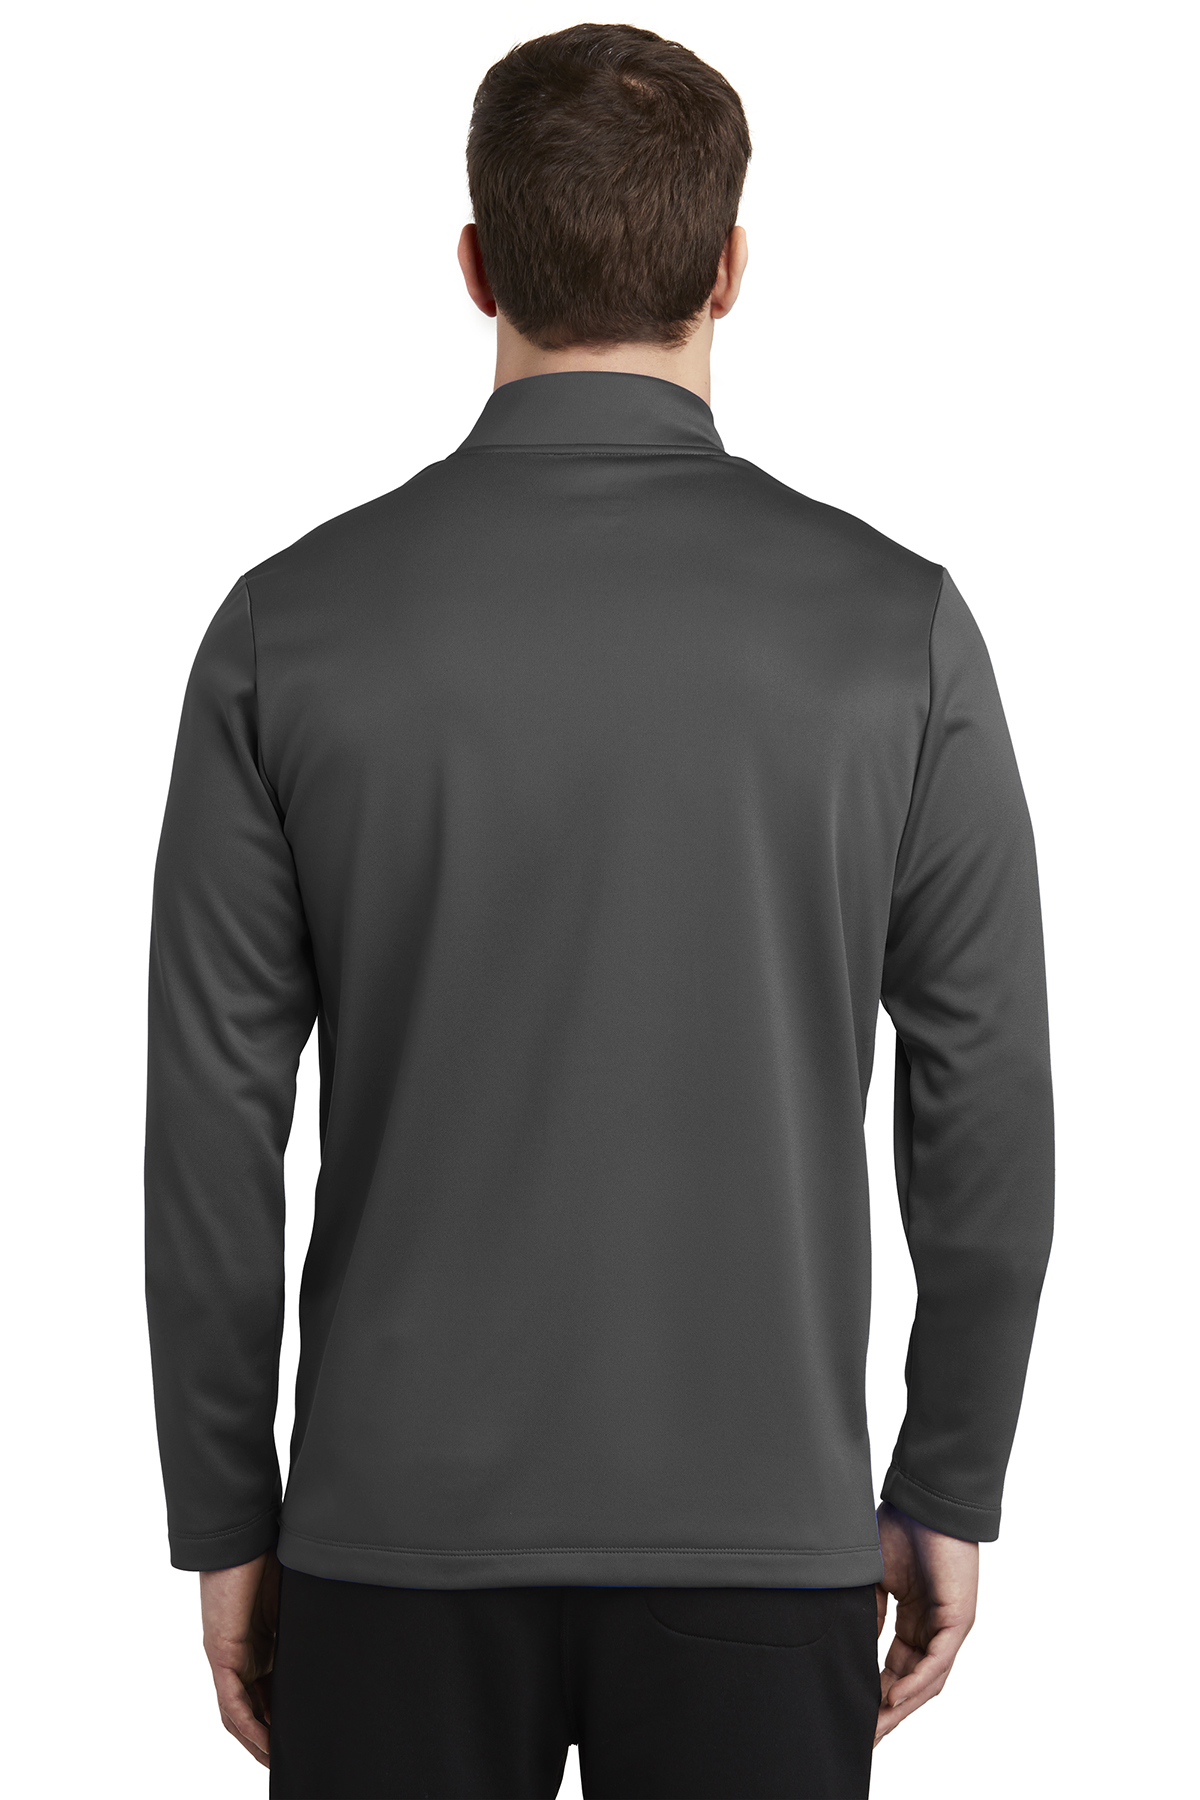 Nike Therma-FIT Full-Zip Fleece | Product | SanMar